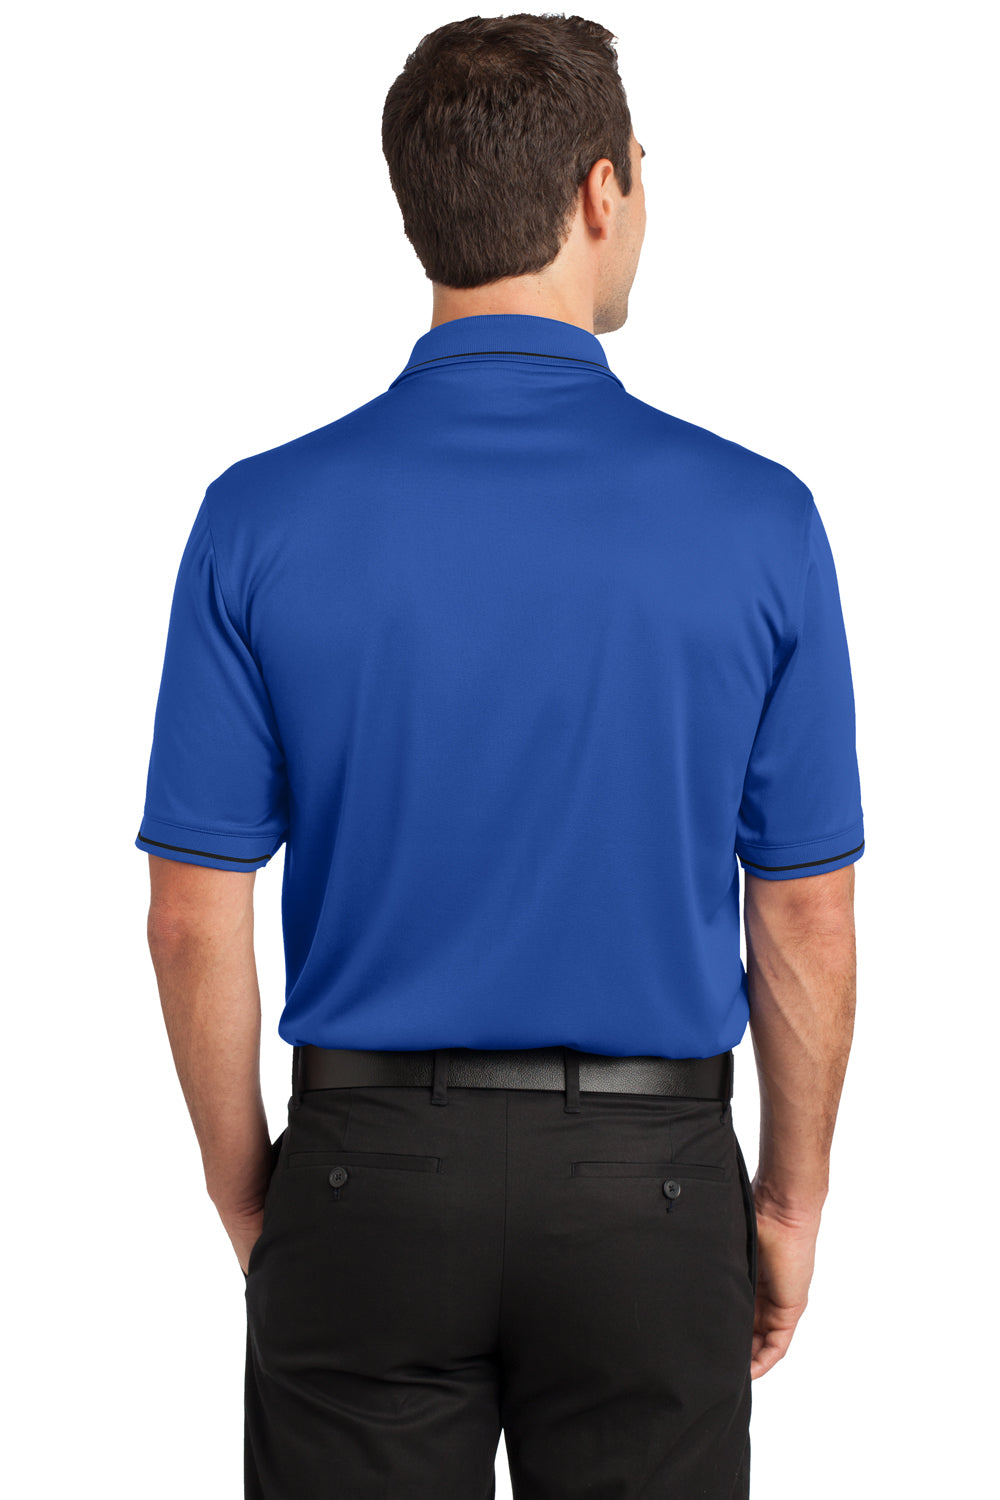 CornerStone CS415 Mens Select Moisture Wicking Short Sleeve Polo Shirt w/ Pocket Royal Blue Back